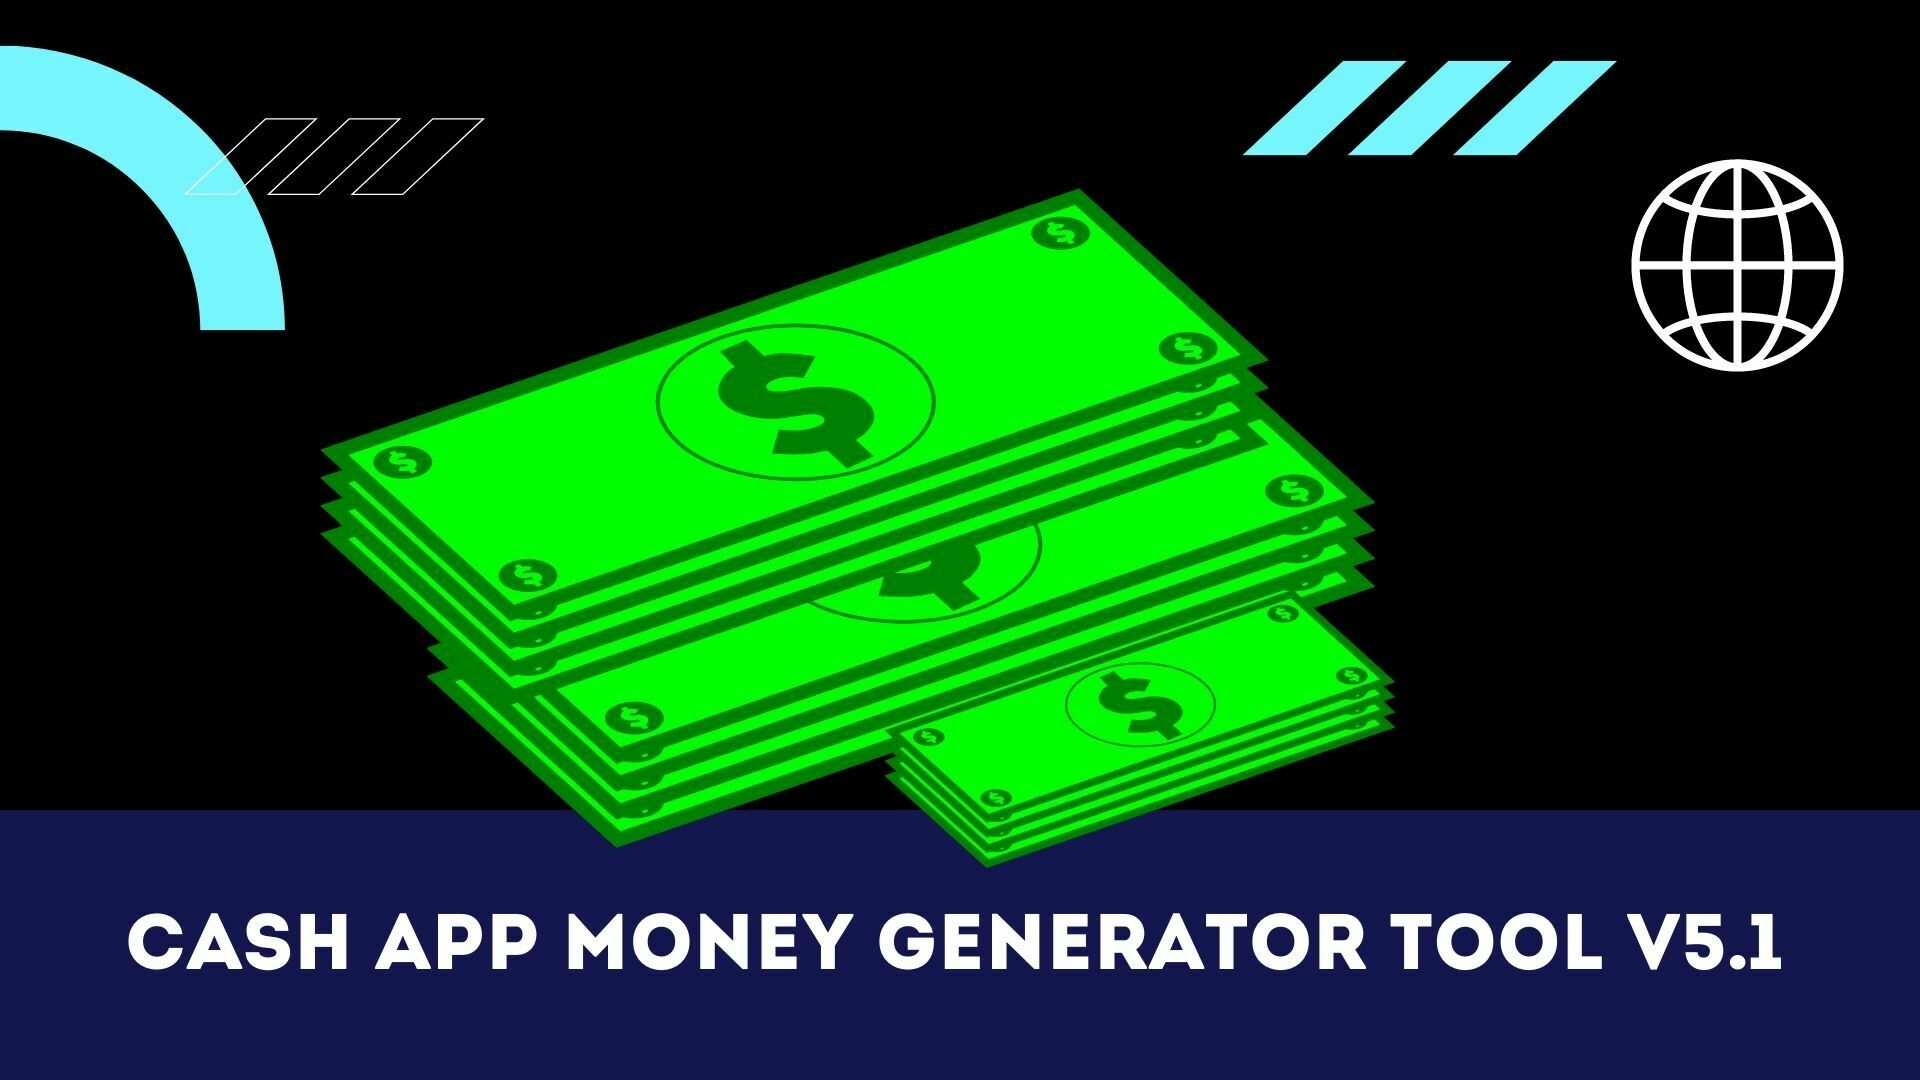 Cash app money generator tool information